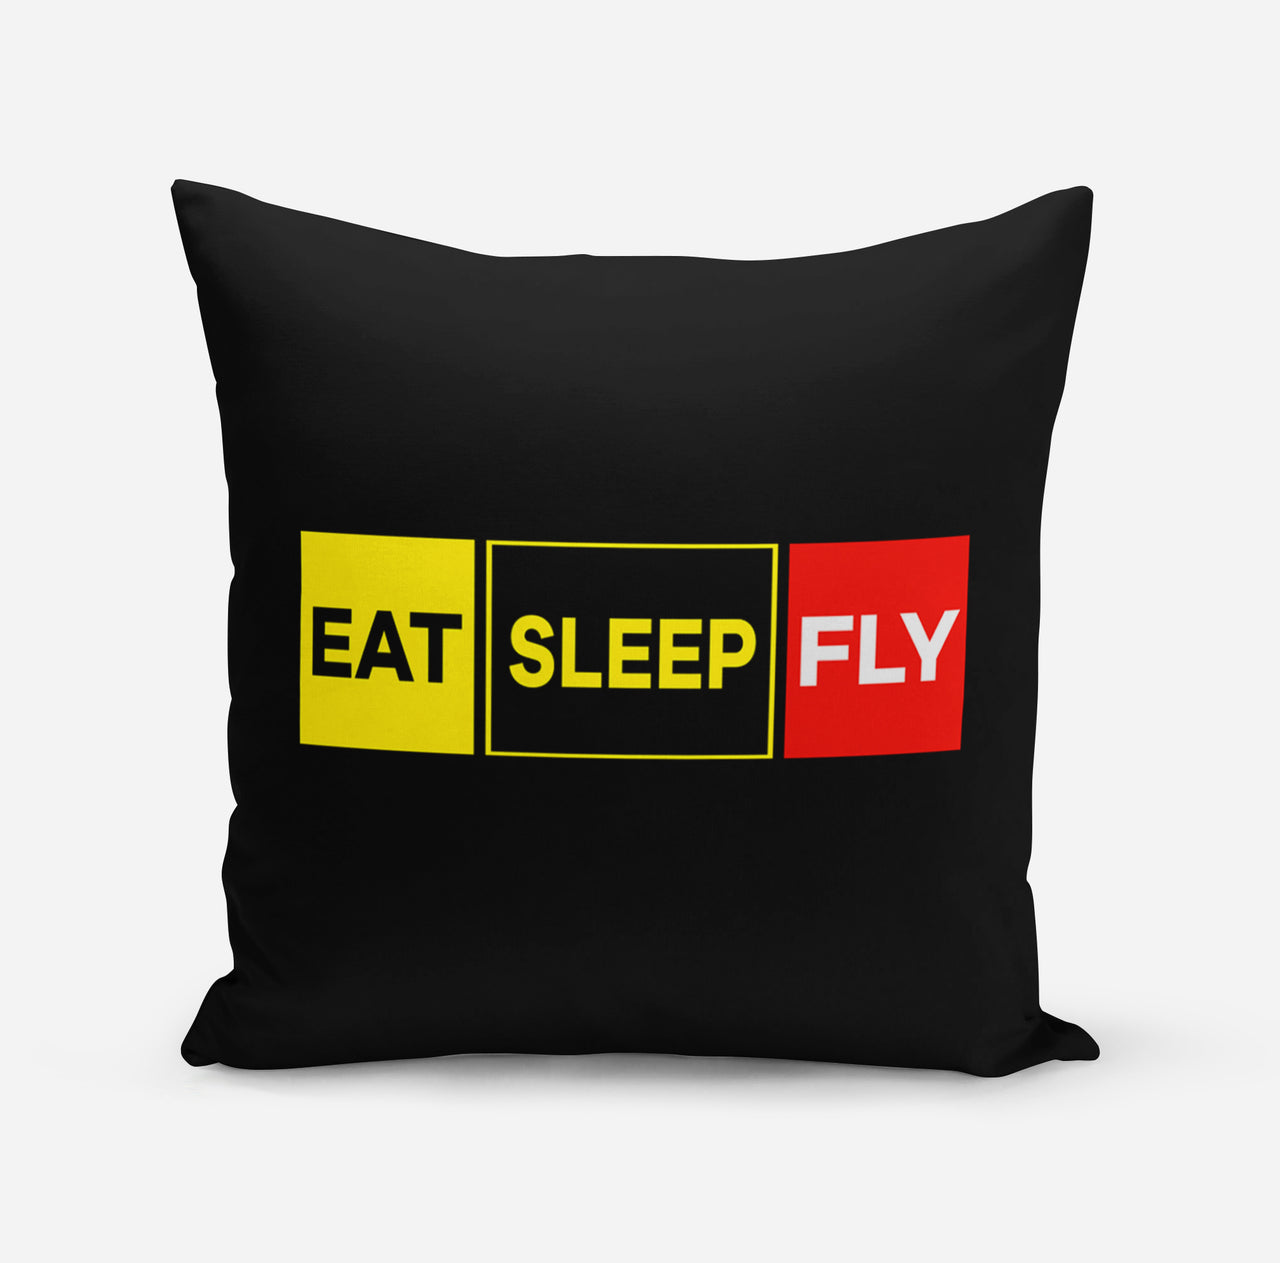 Eat Sleep Fly (Colourful) Designed Pillows